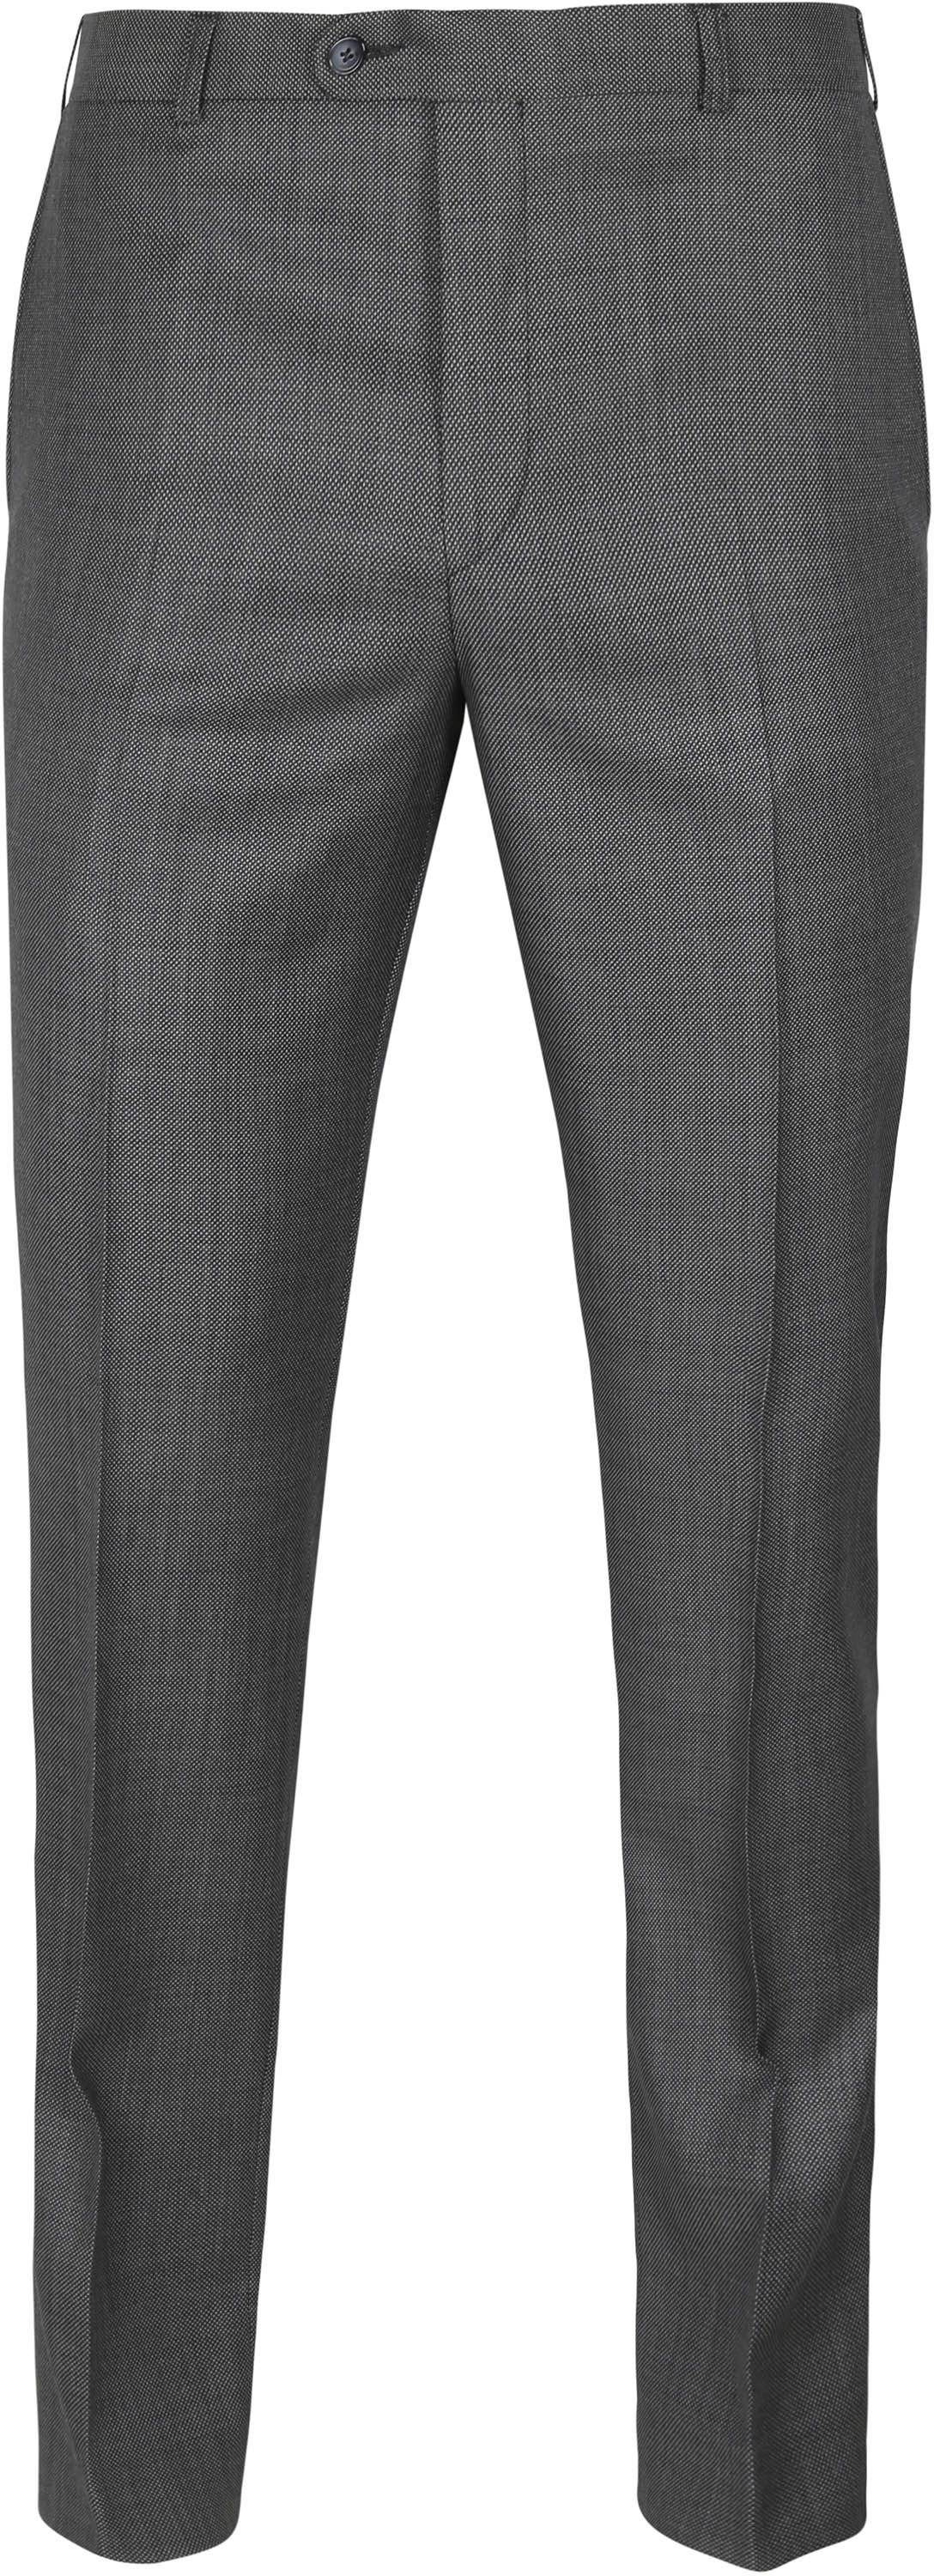 Suitable Pantalon Proculus Anthraciet Dark Grey Grey size 36-R